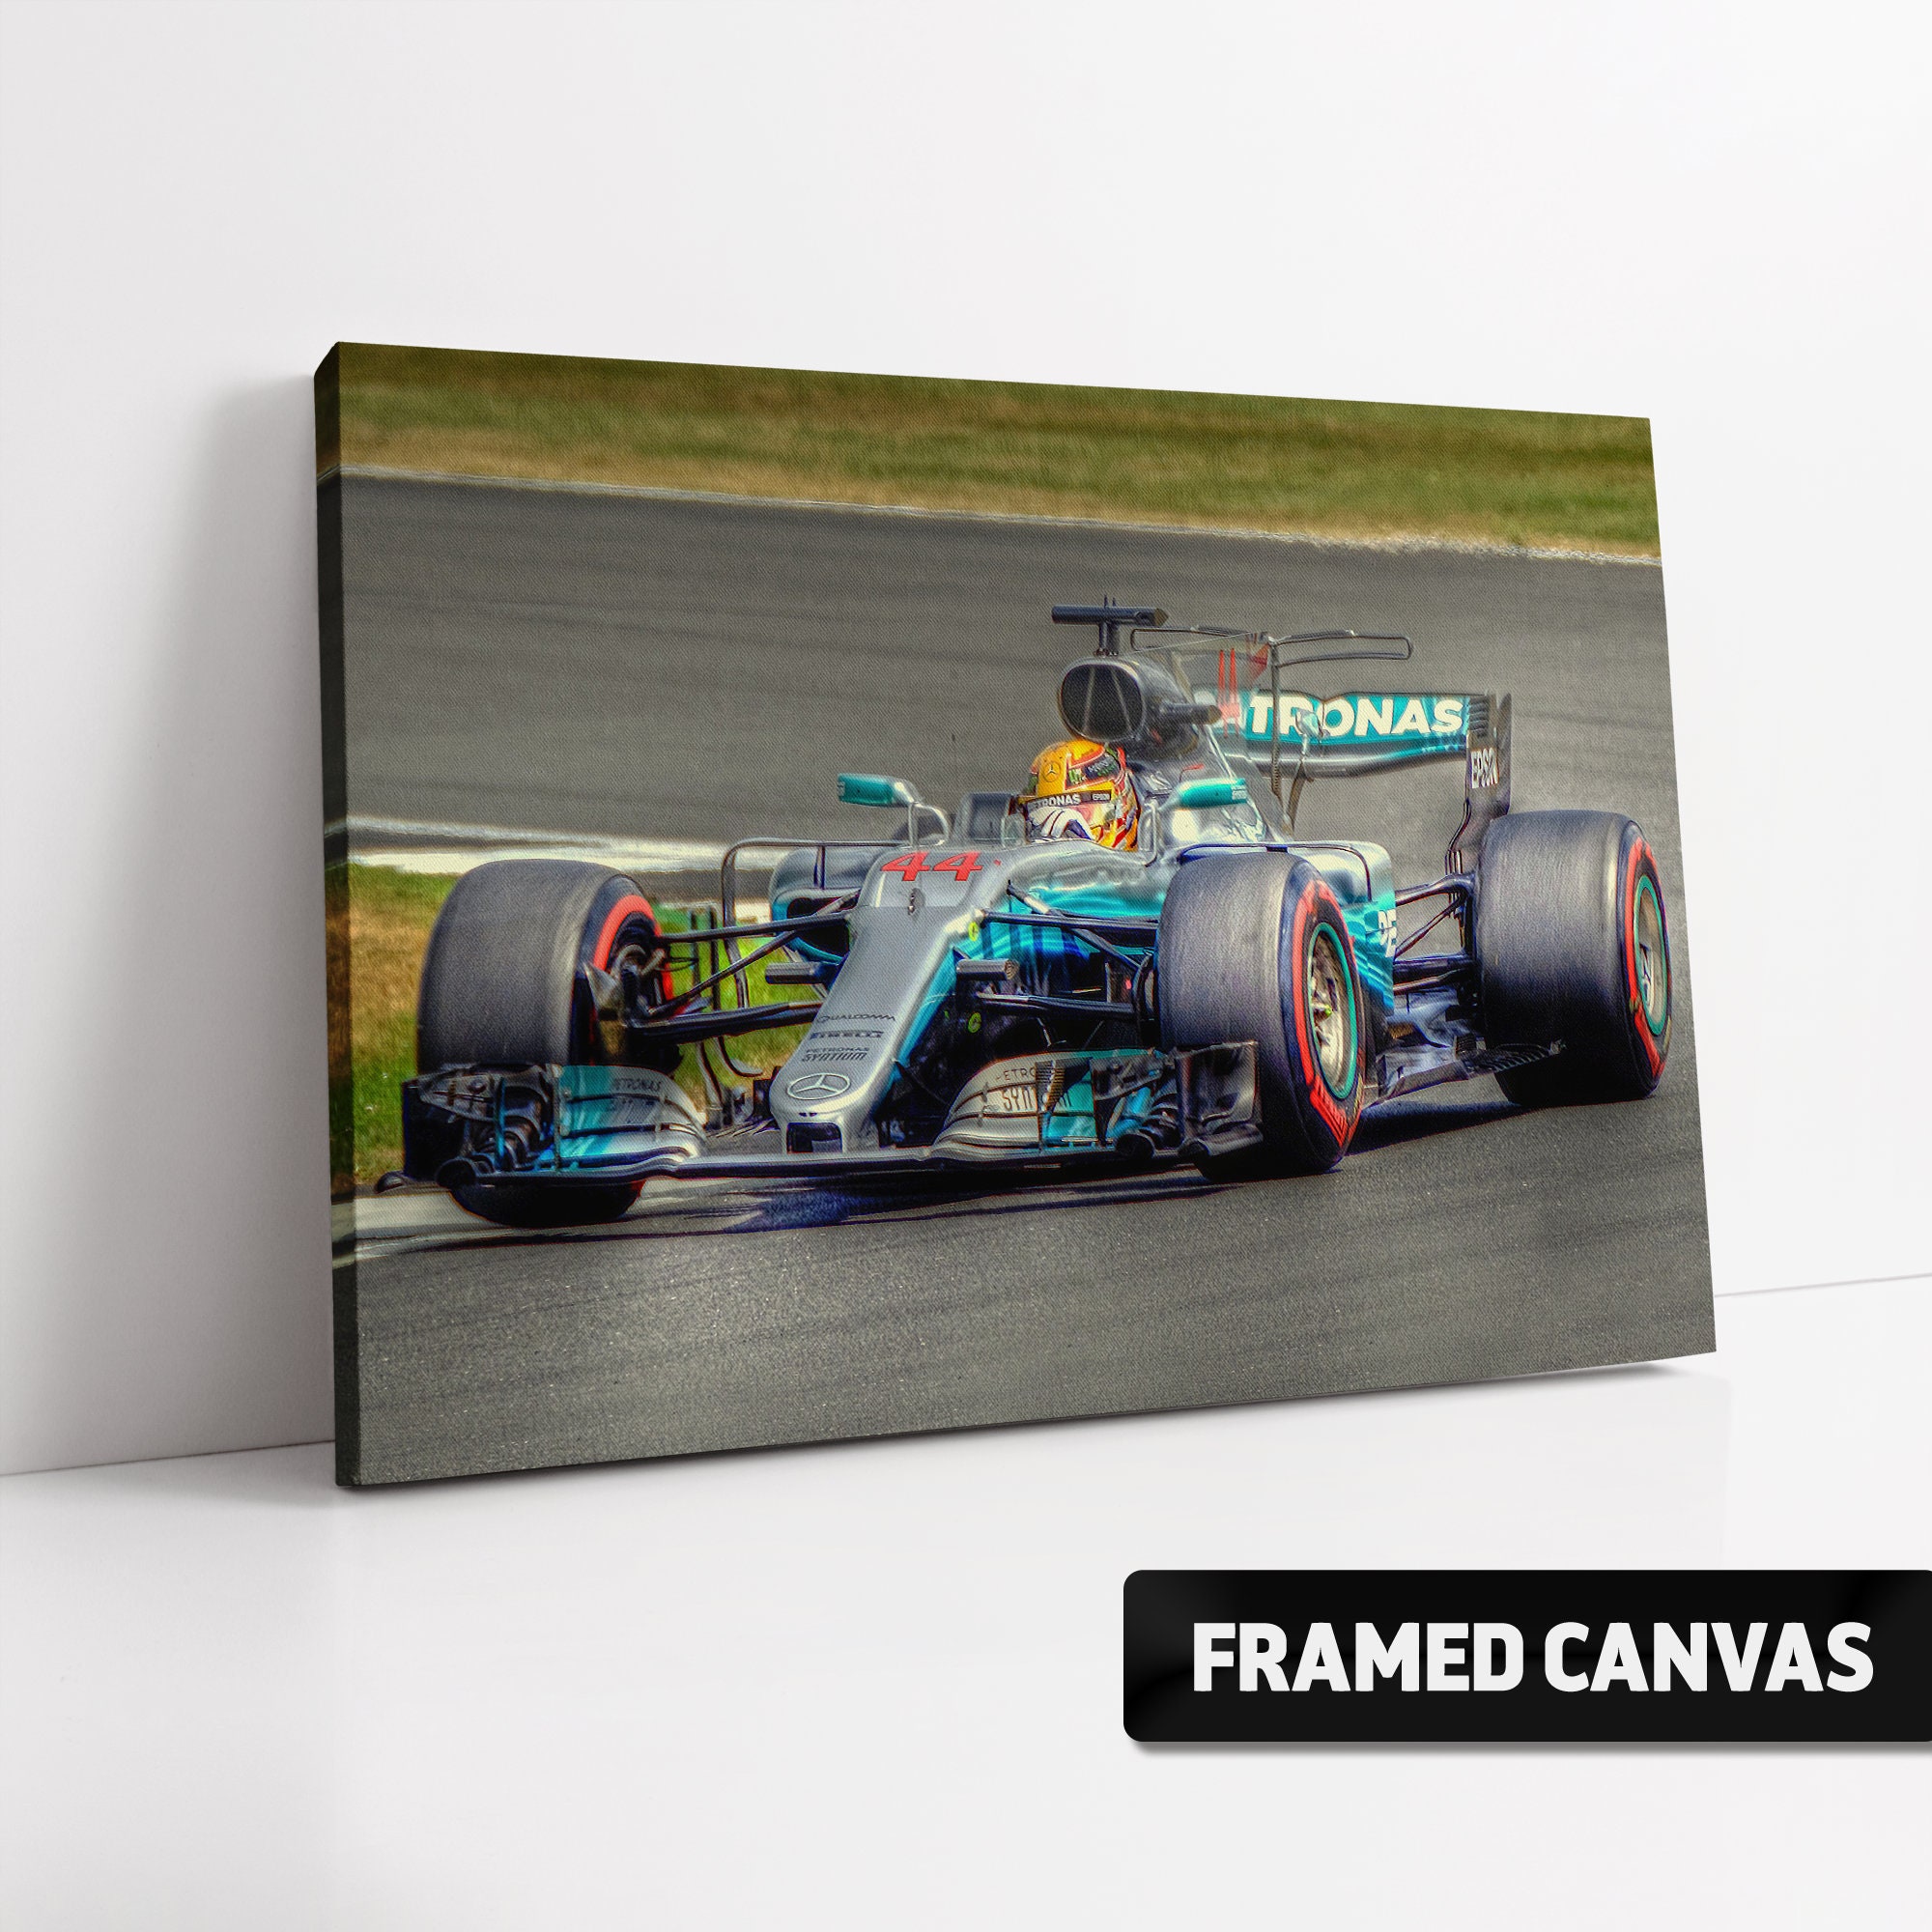 Lewis Hamilton 2017 Silverstone F1 Winner Mercedes Framed Canvas Print Signed 